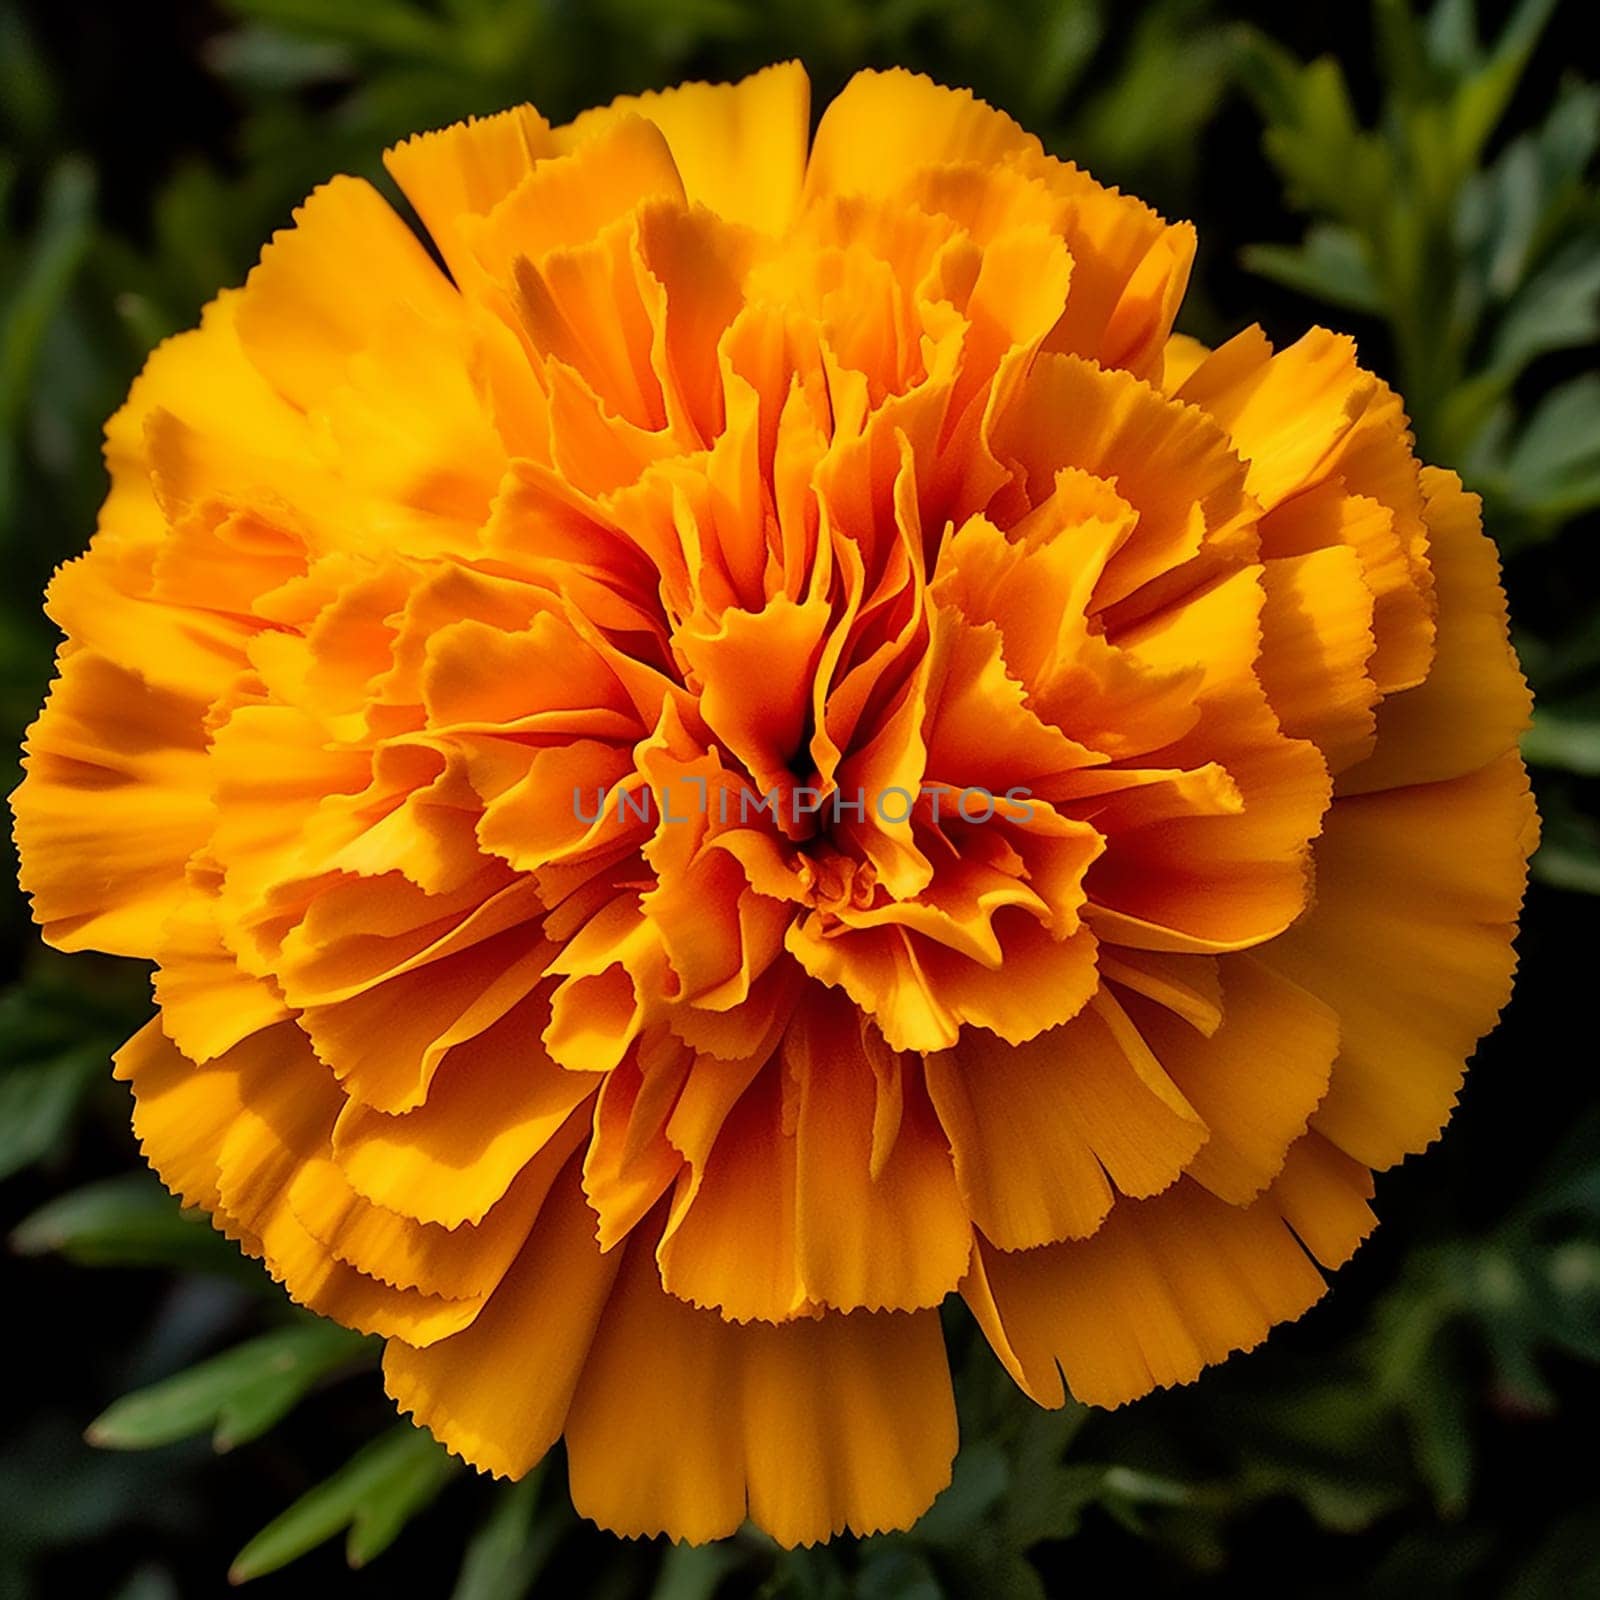 Vibrant orange marigold with lush petals in full bloom